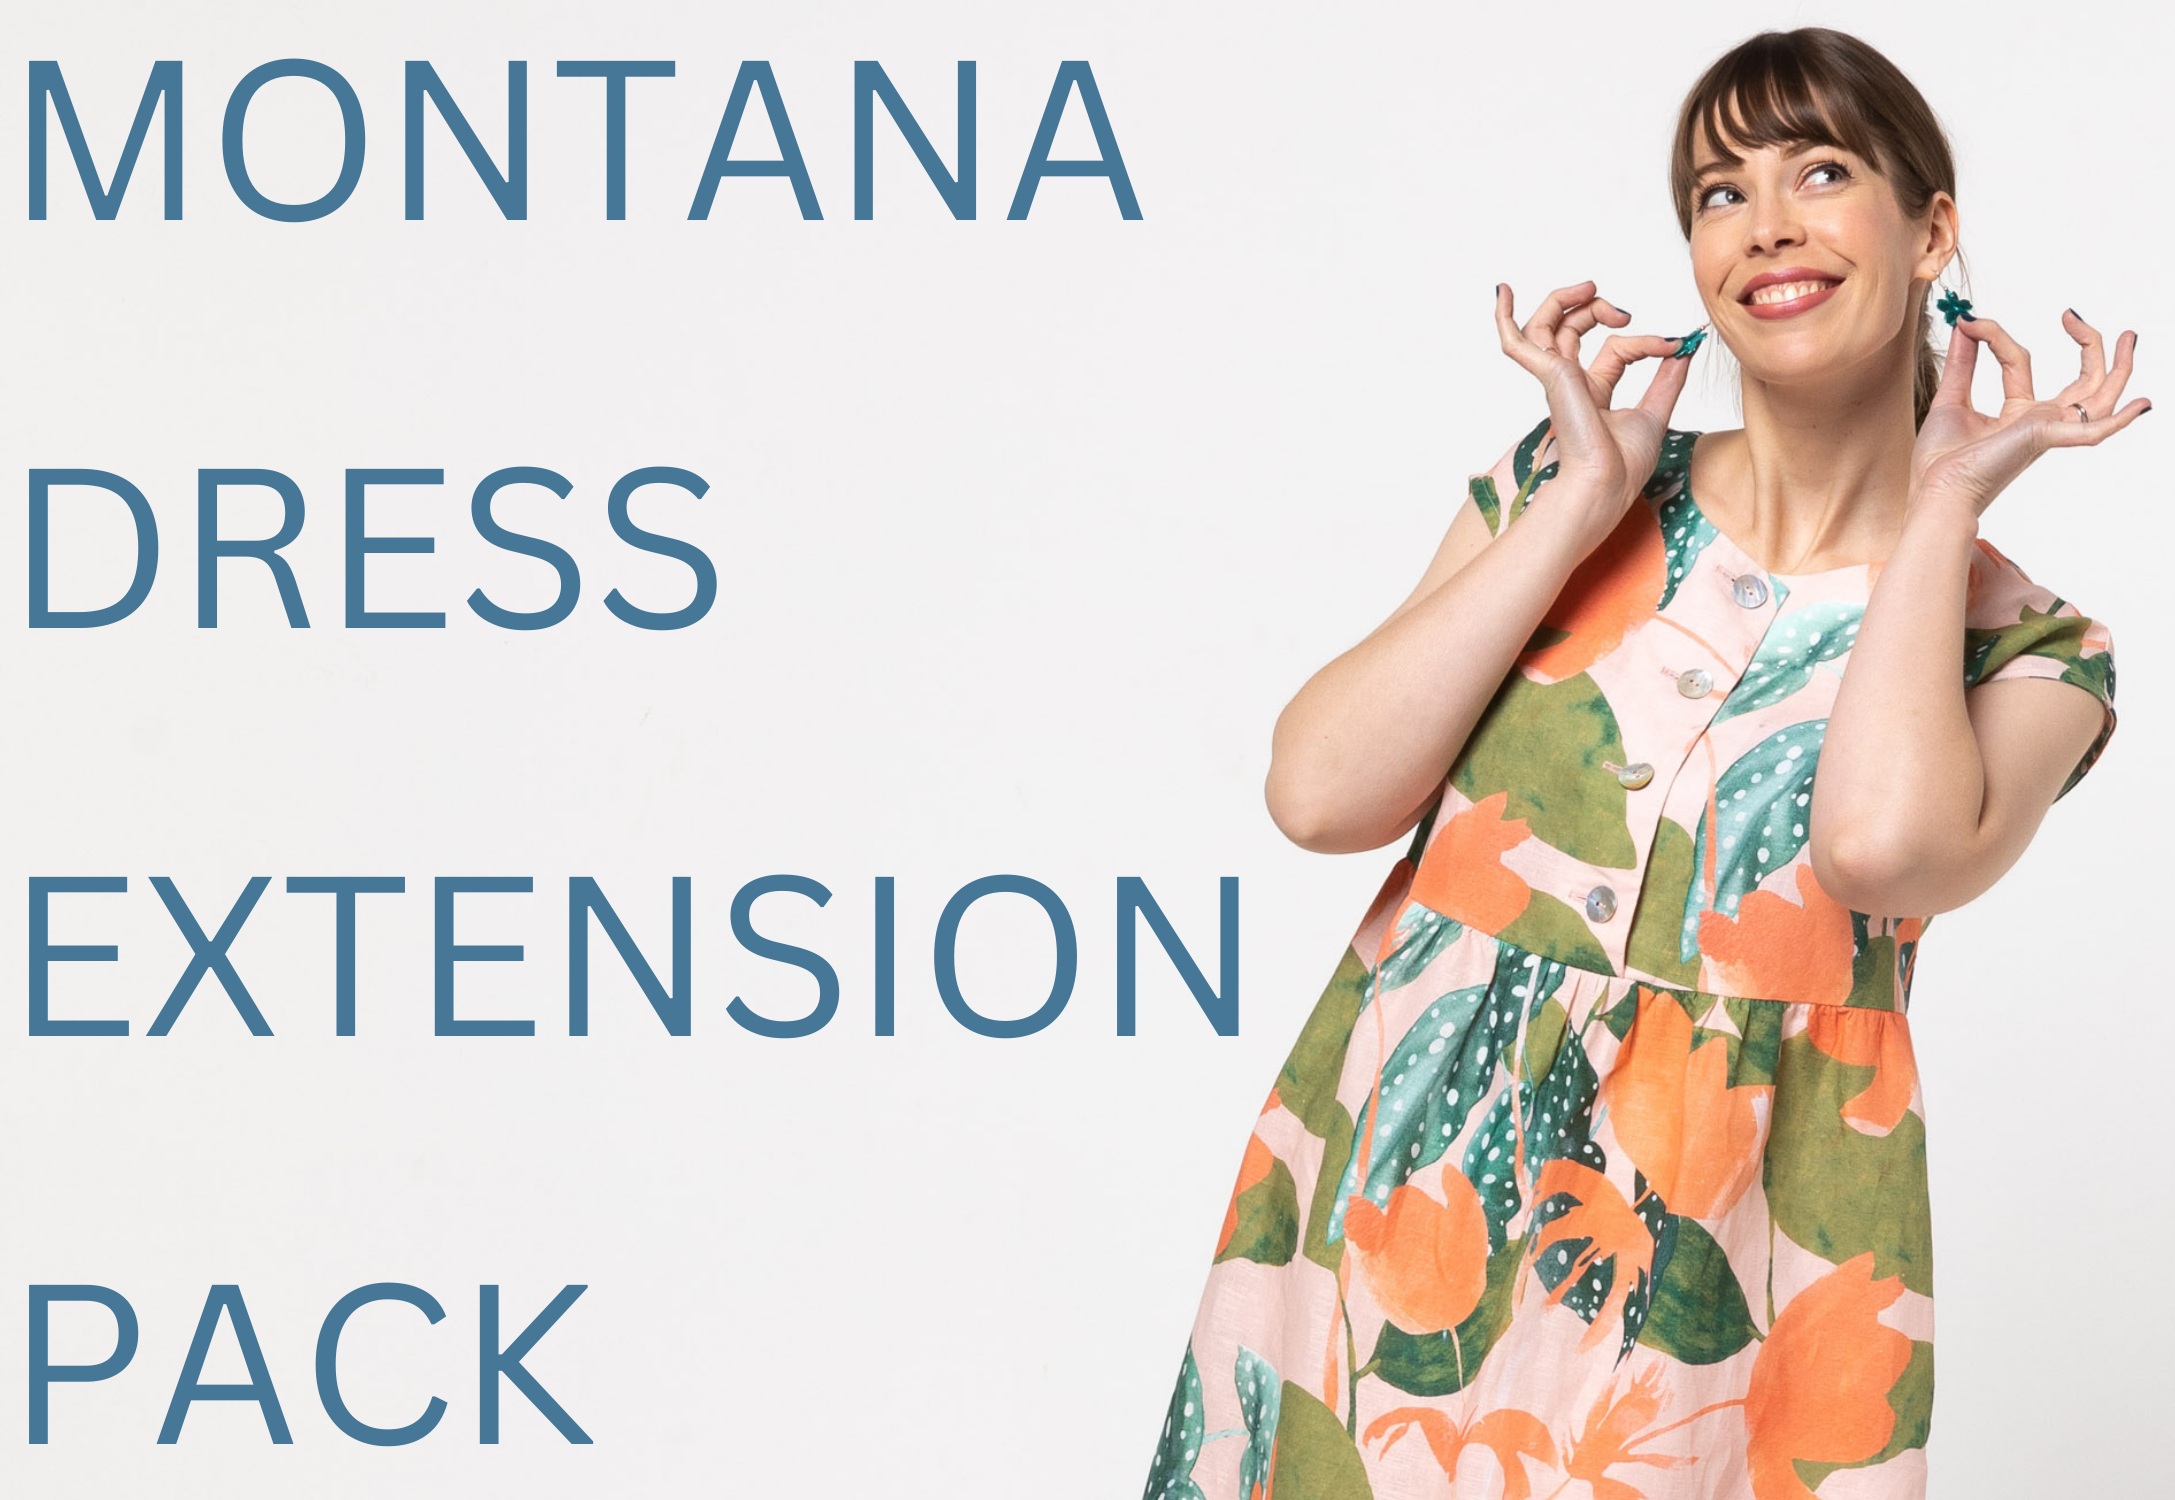 New - Montana Dress Extension Pack!